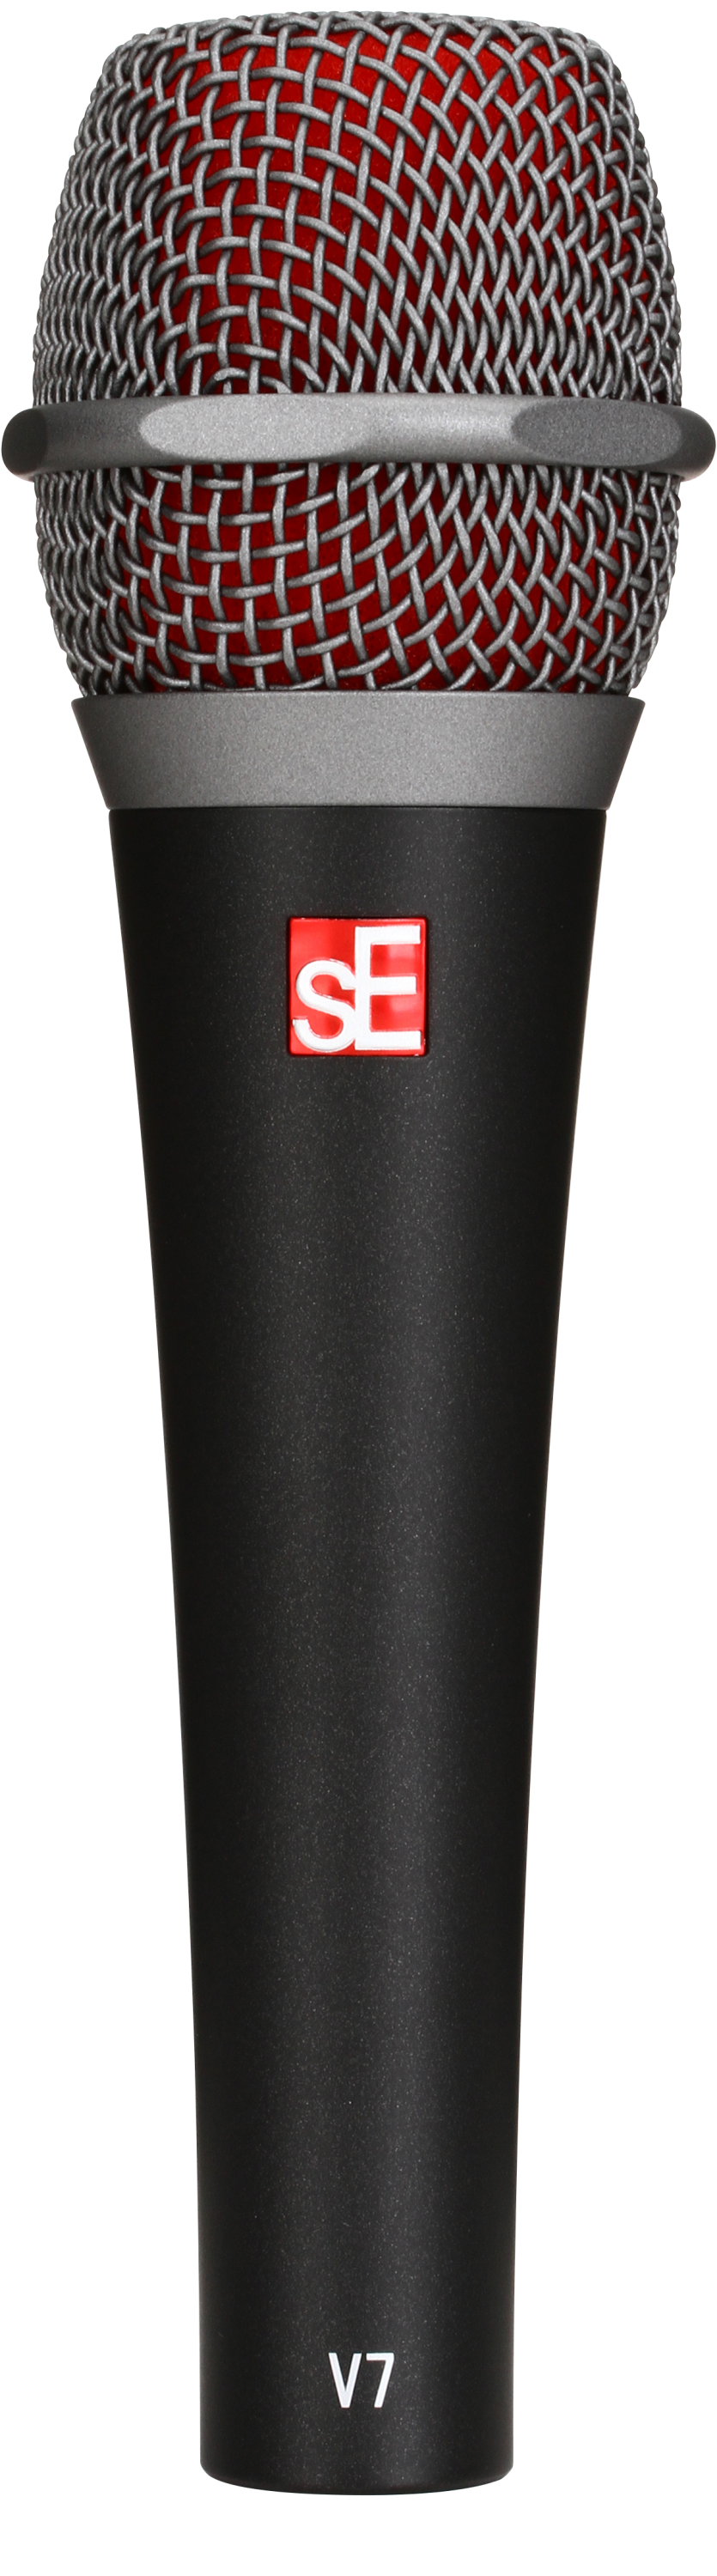 Bundled Item: sE Electronics V7 Supercardioid Dynamic Handheld Vocal Microphone